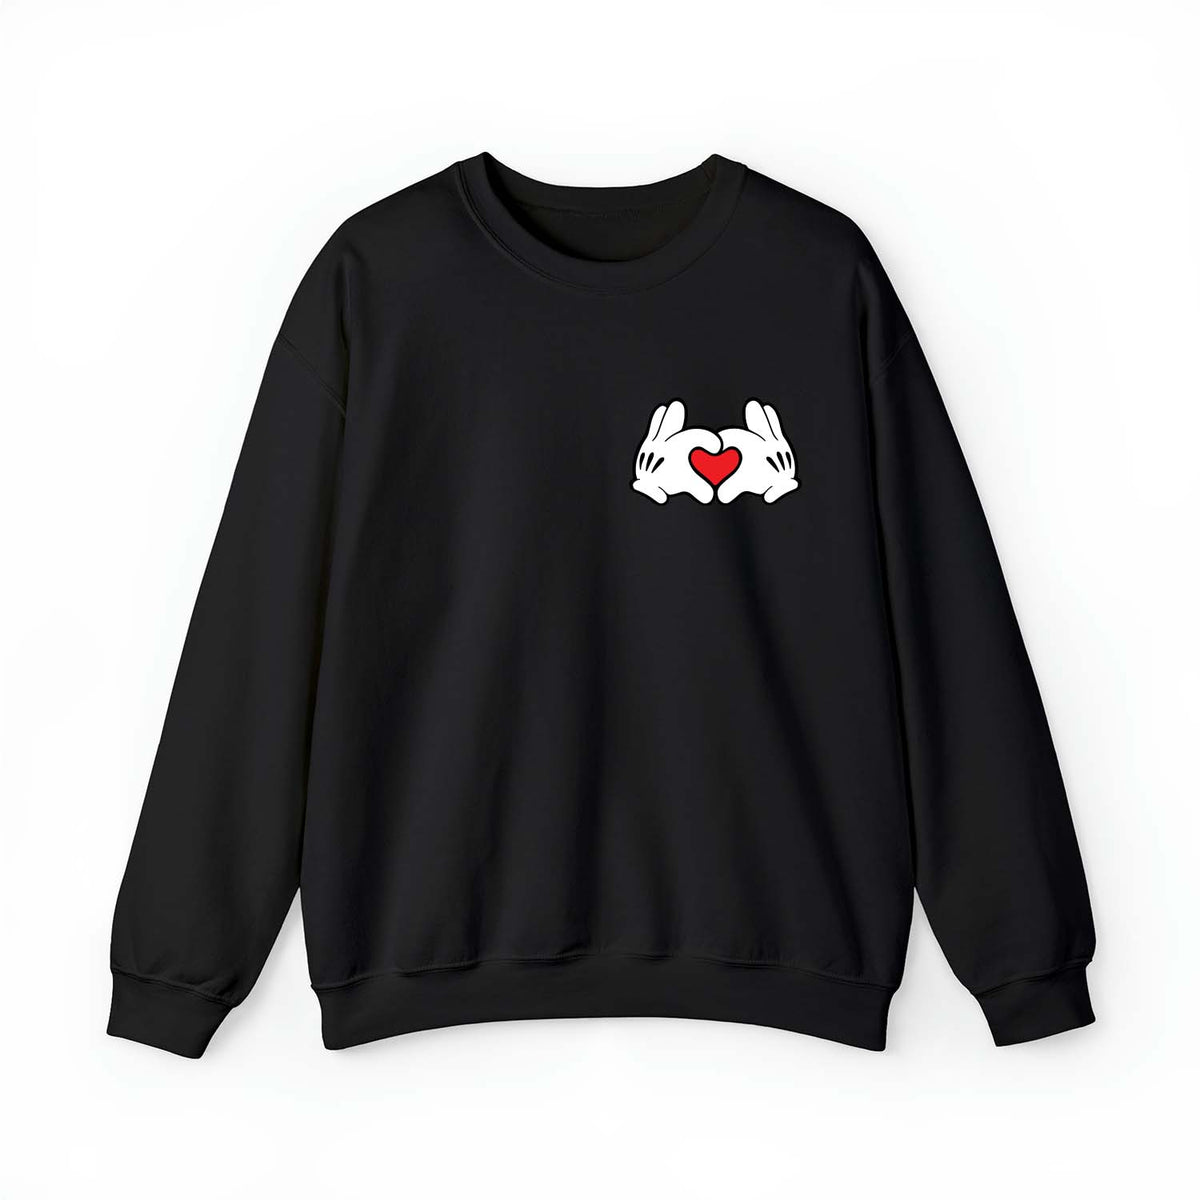 black-sweatshirt-with-pocket-size-mickey-sign-heart